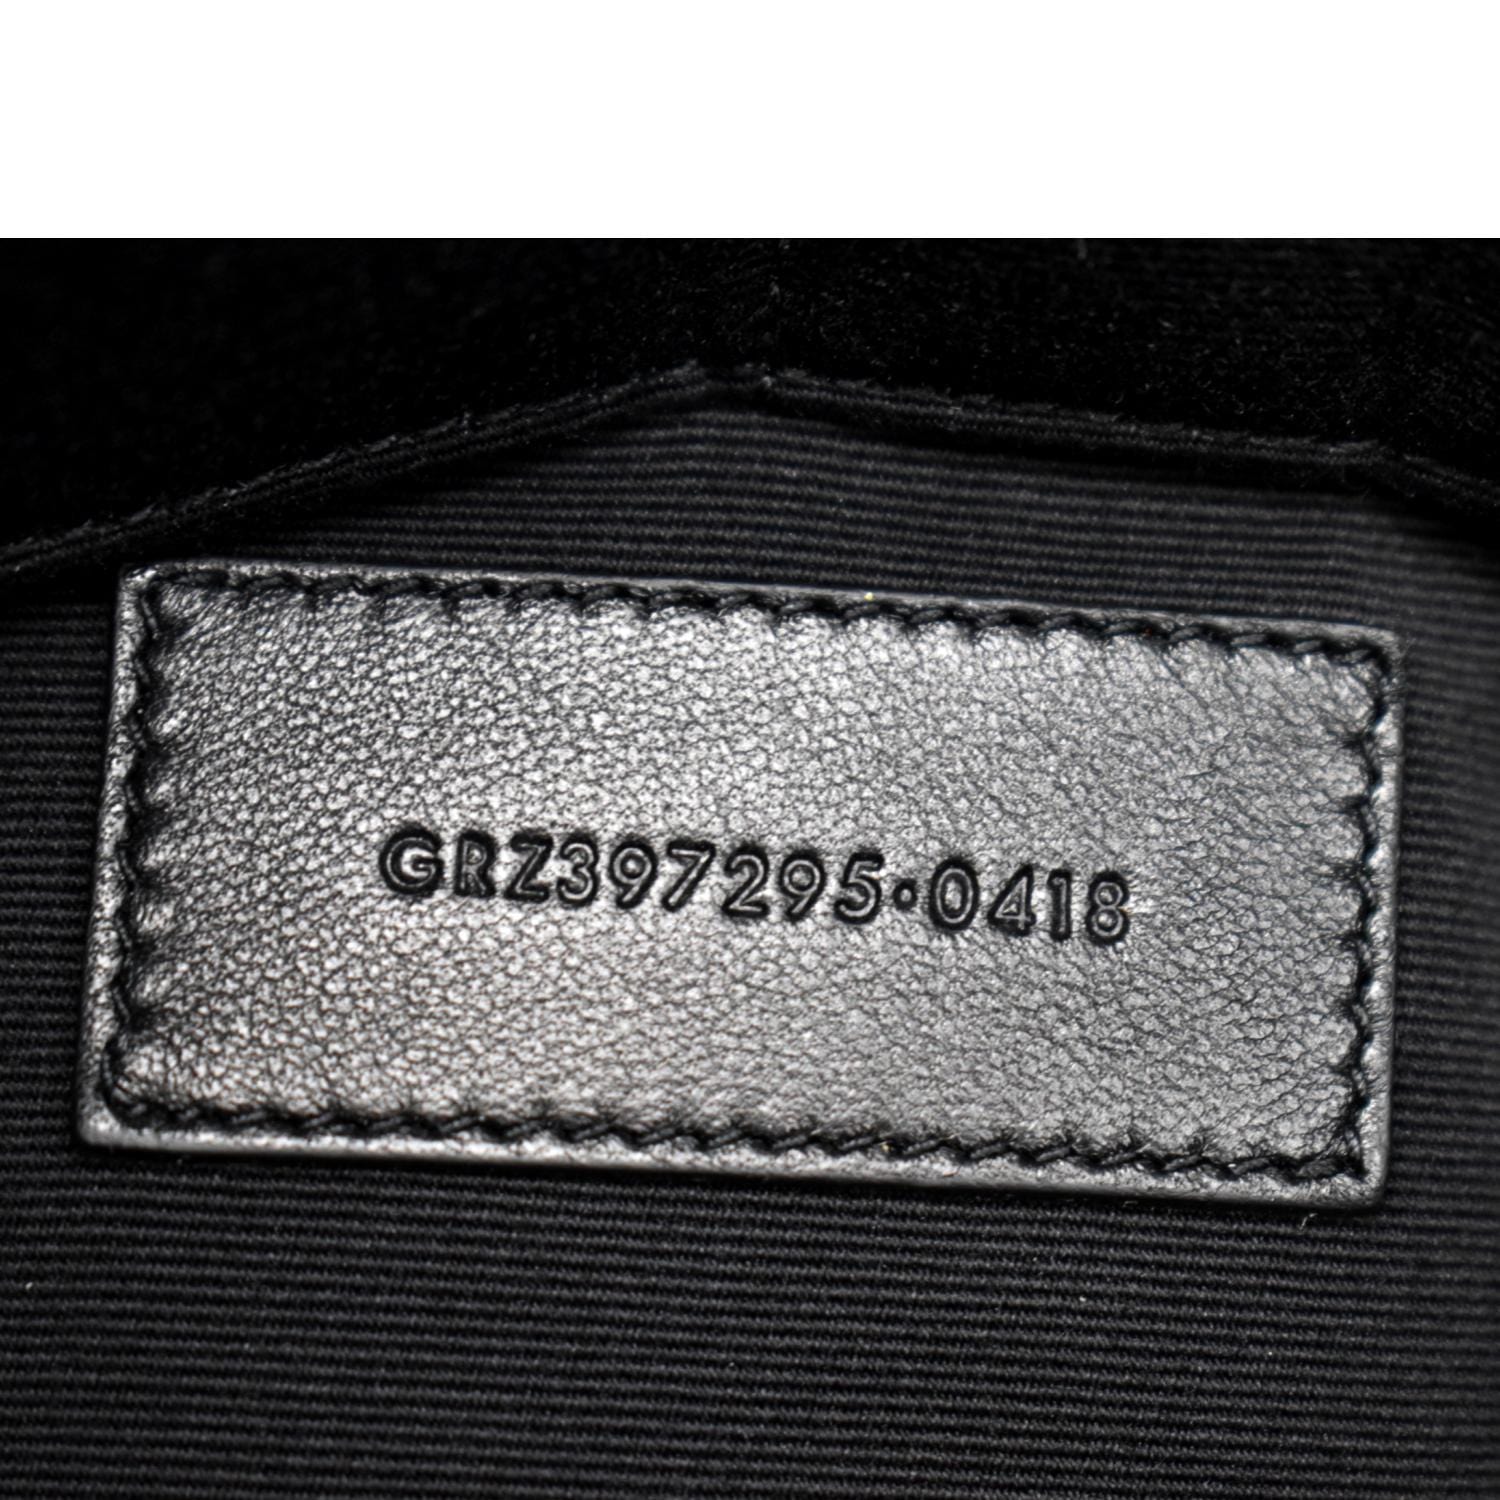 YVES SAINT LAURENT Zip Studded Leather Pouch Black